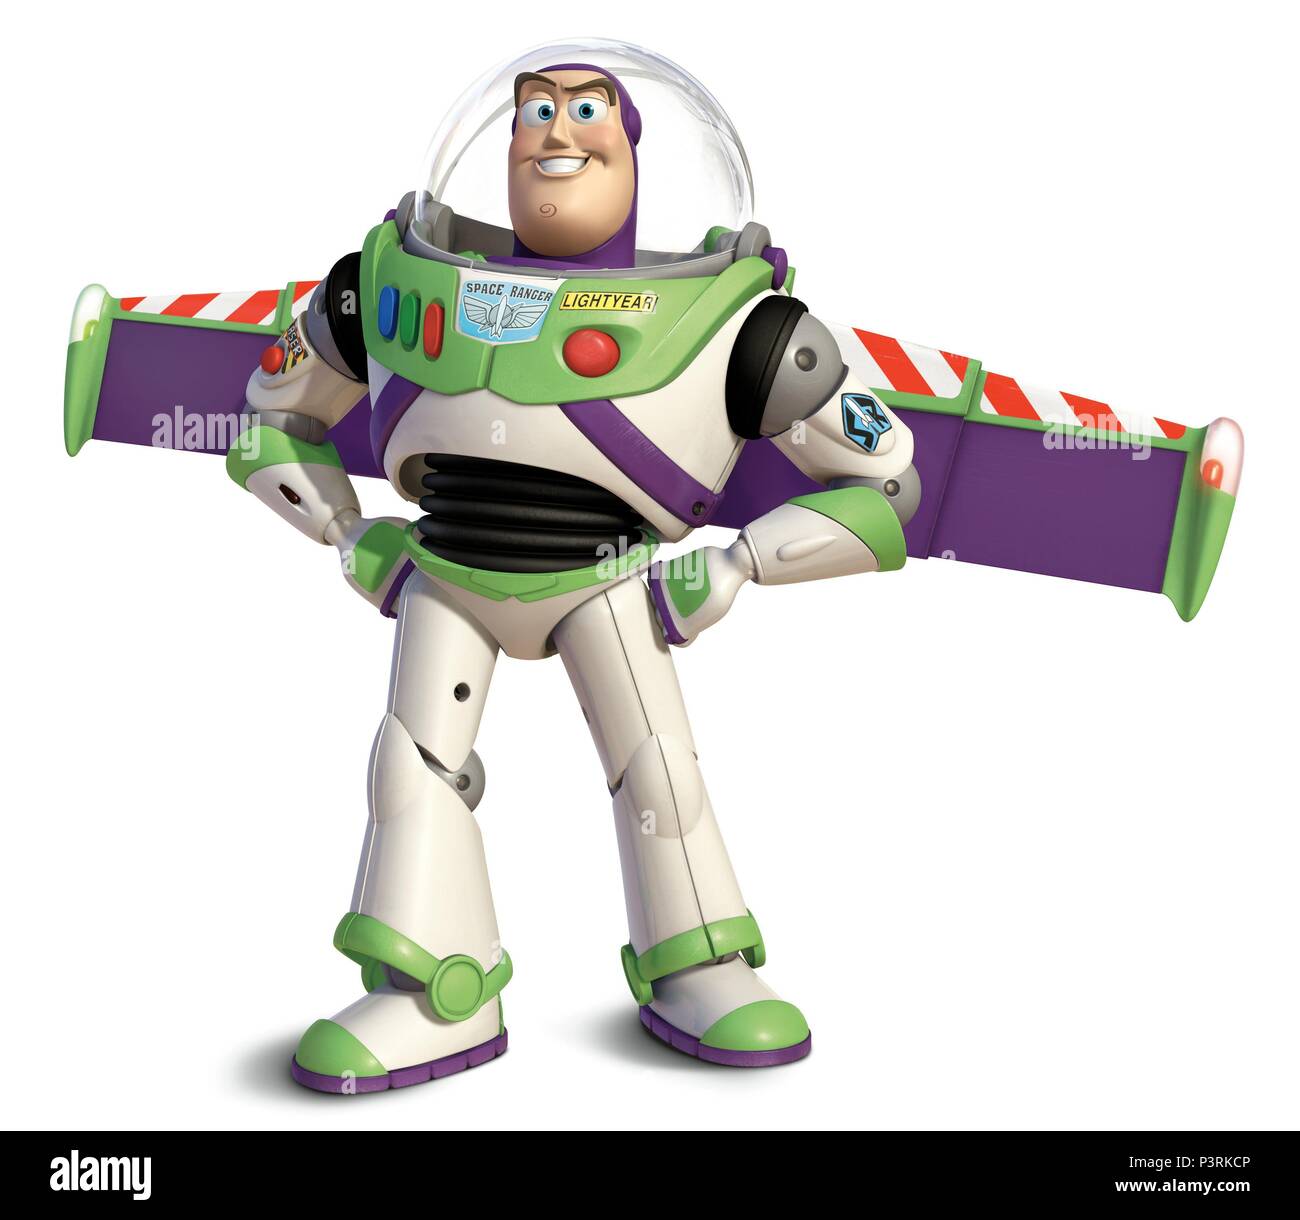 Original Film Titel: Toy Story 3. Englischer Titel: Toy Story 3. Regisseur: Lee Unkrich. Jahr: 2010. Credit: Pixar Animation Studios / WALT DISNEY PICTURES/Album Stockfoto